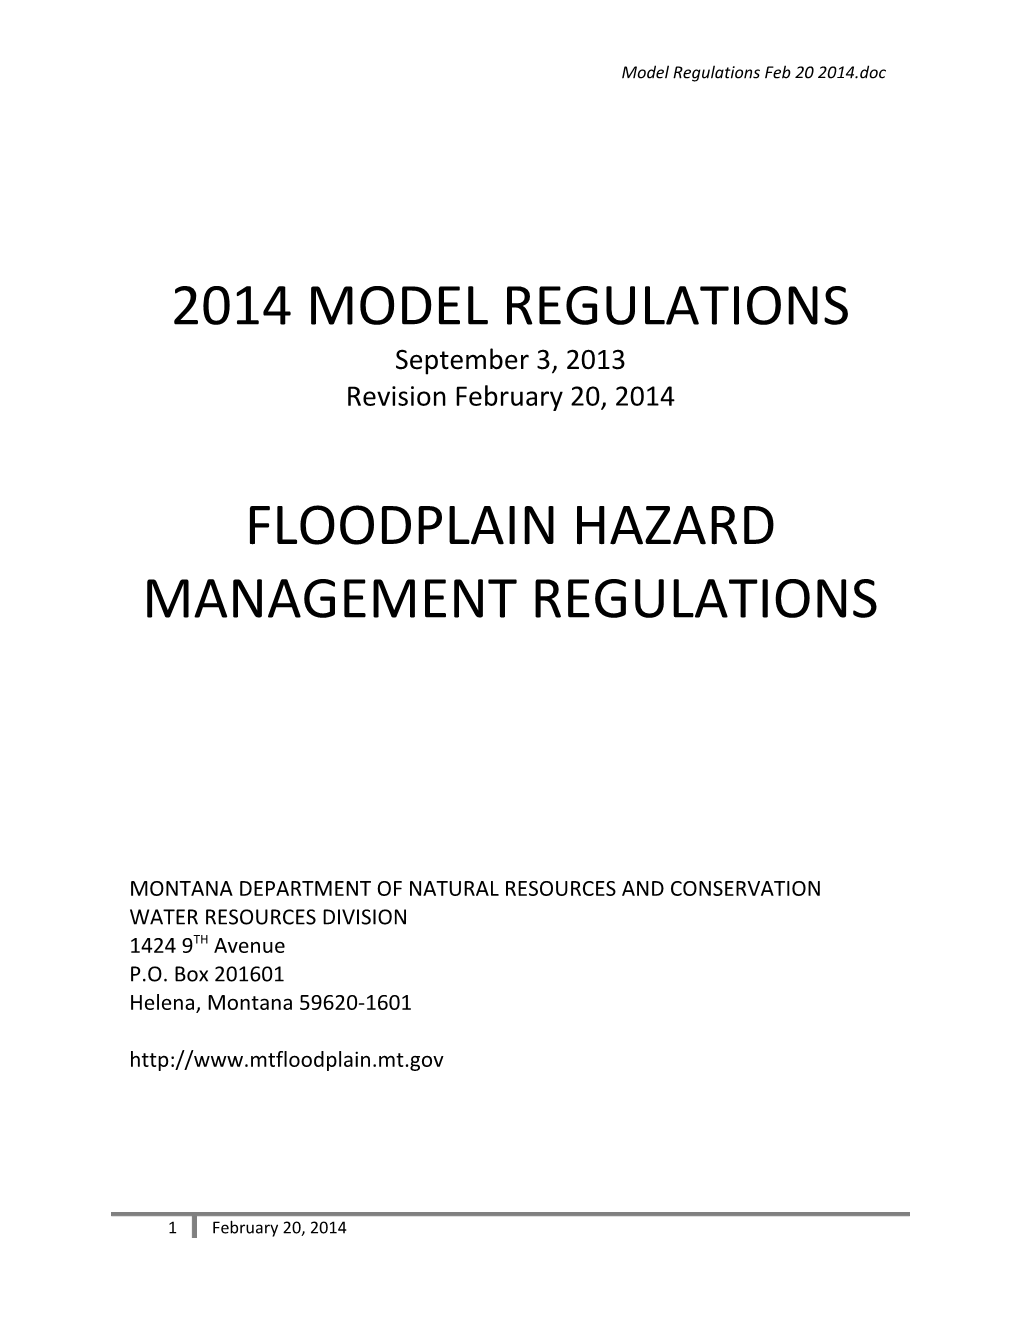 Floodplain Hazard Management Regulations